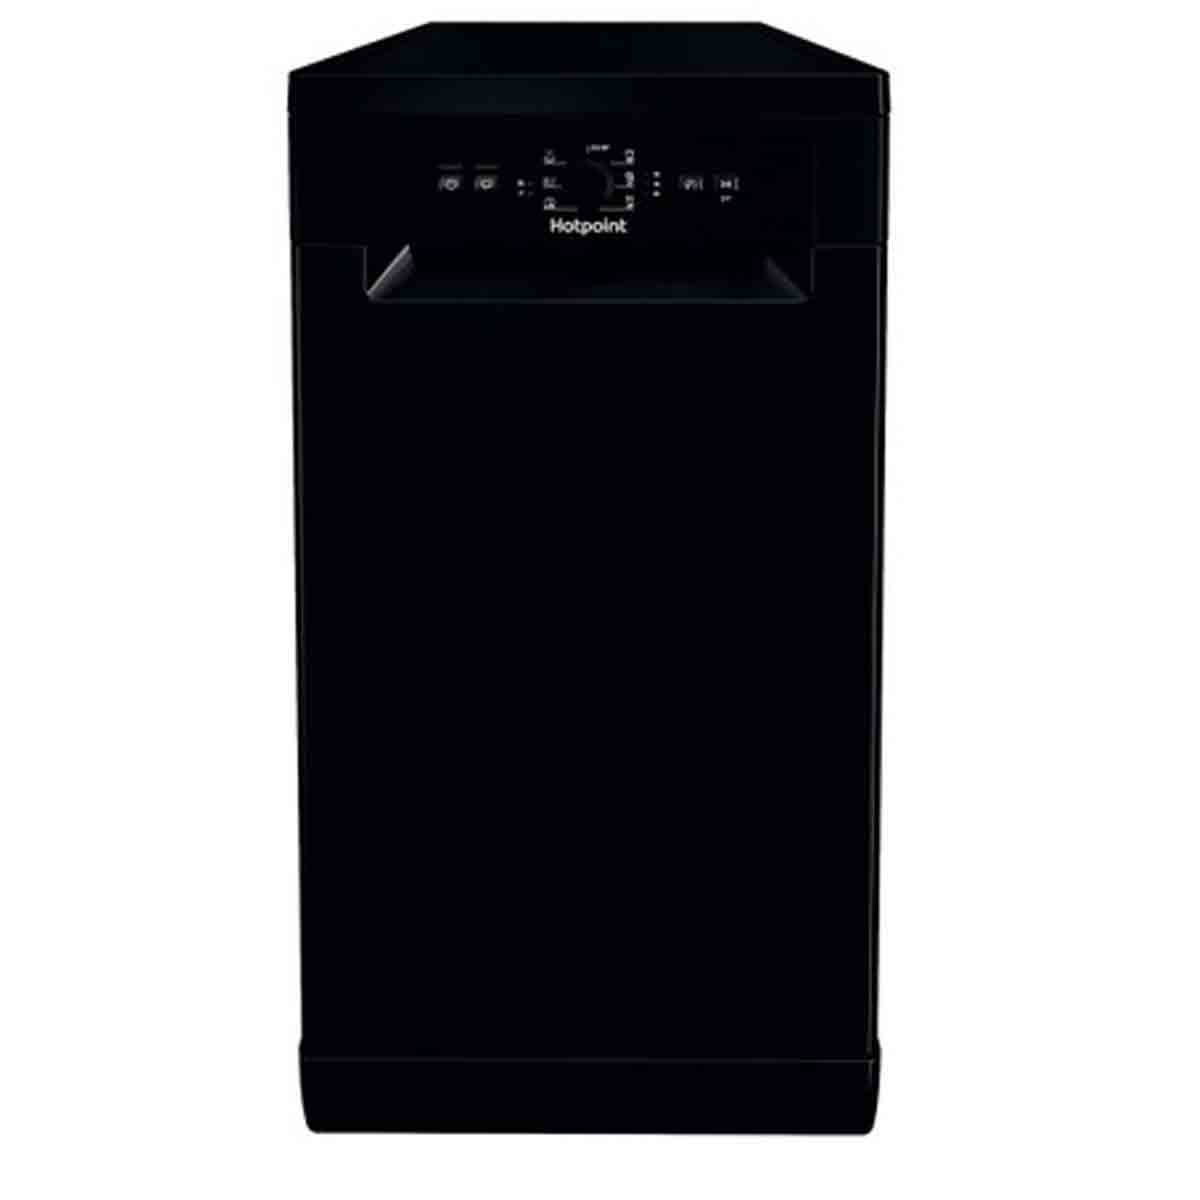 Hotpoint HSFE 1B19 B UK N Dishwasher - Black